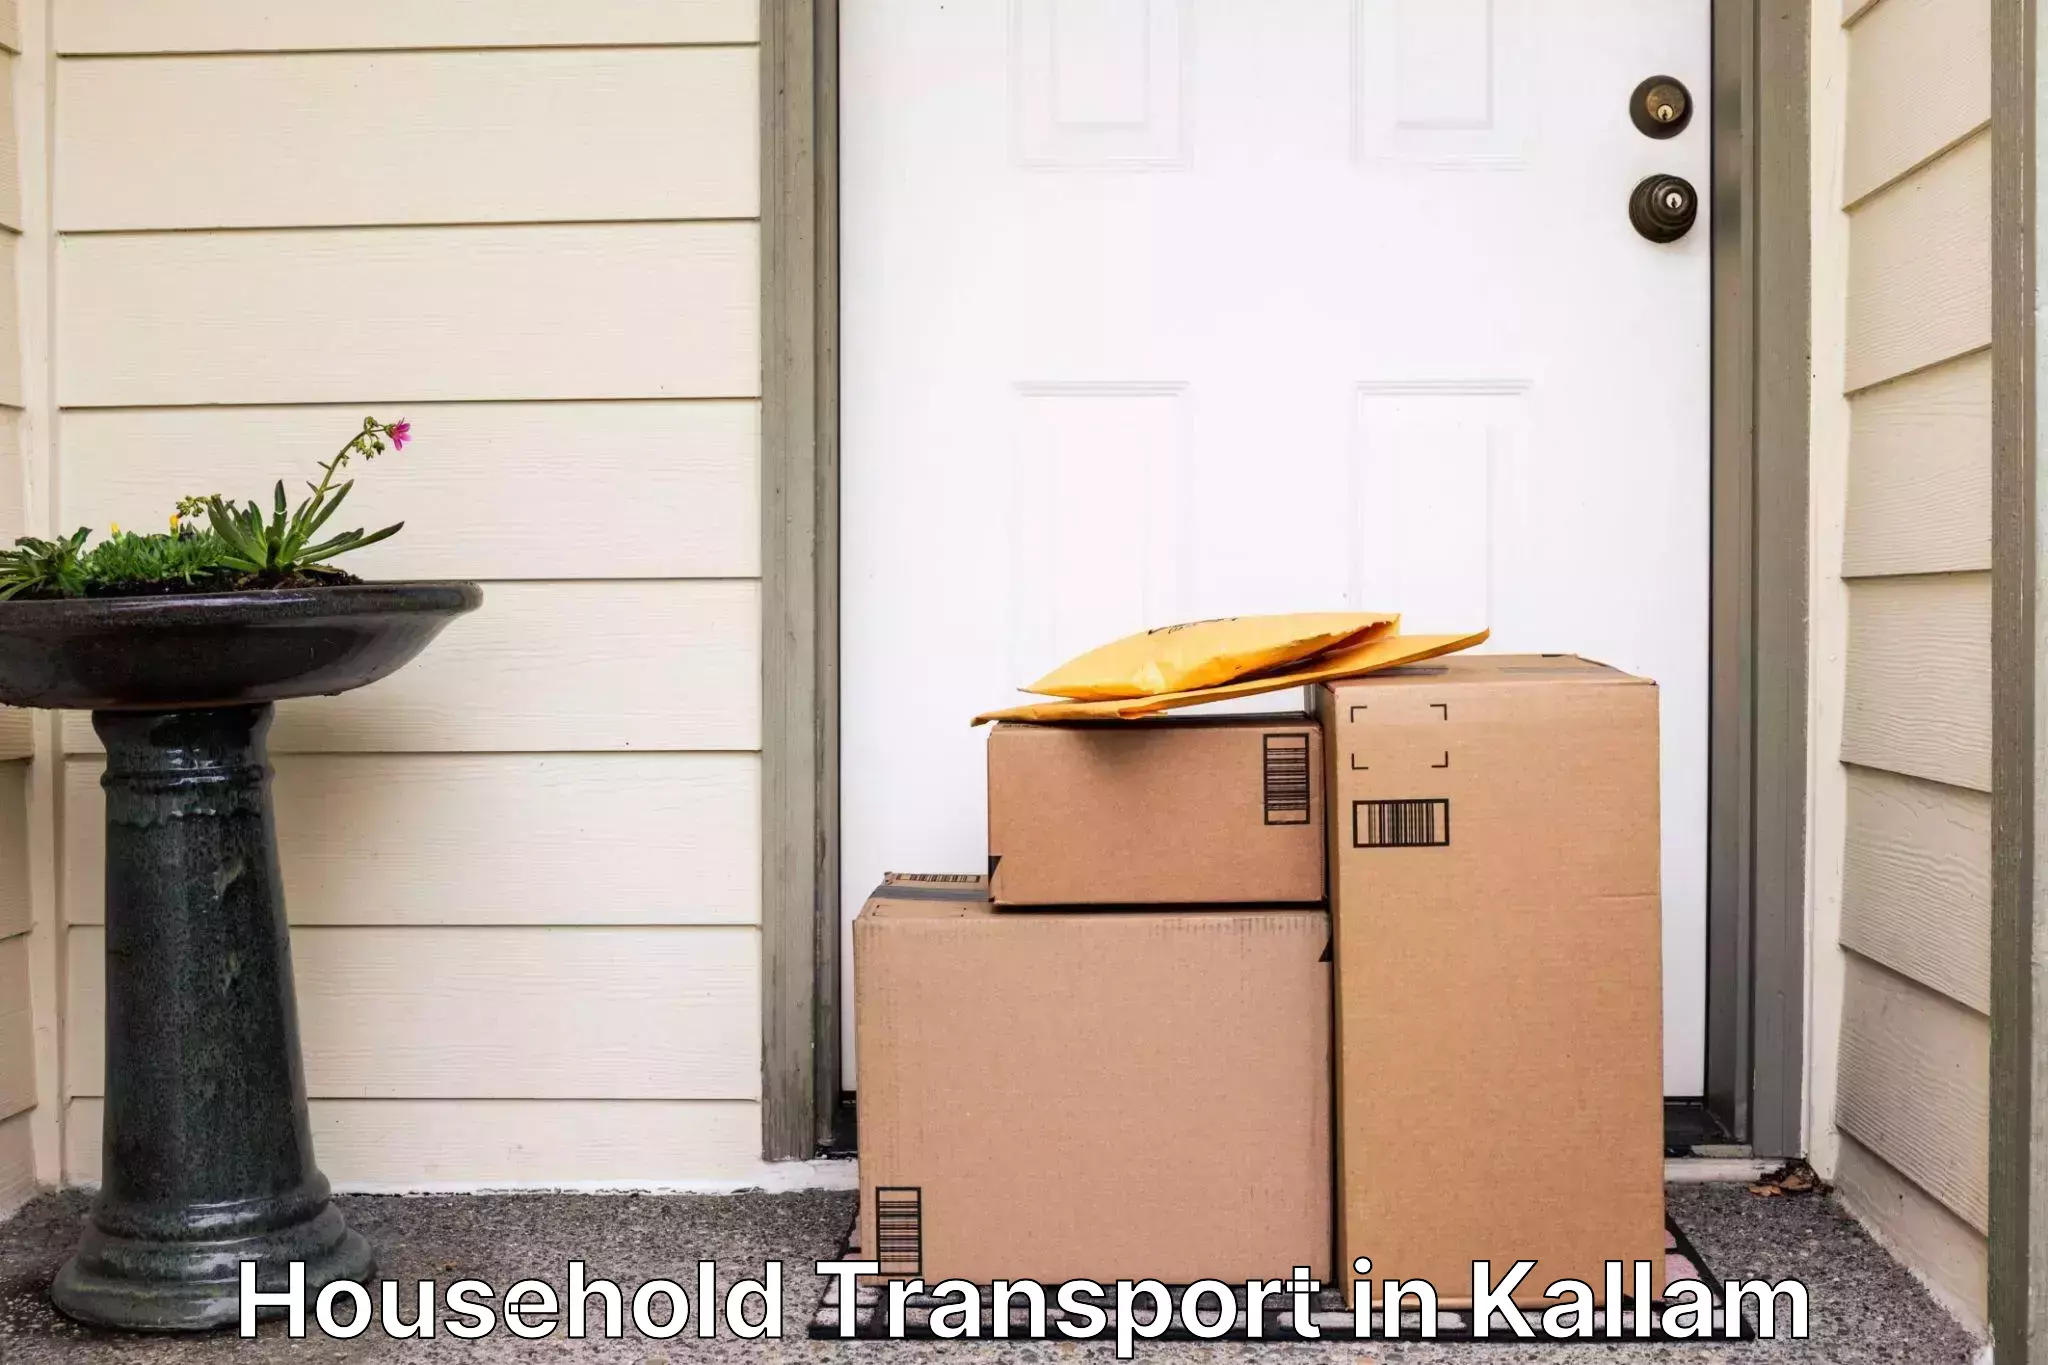 Quality household transport in Kallam